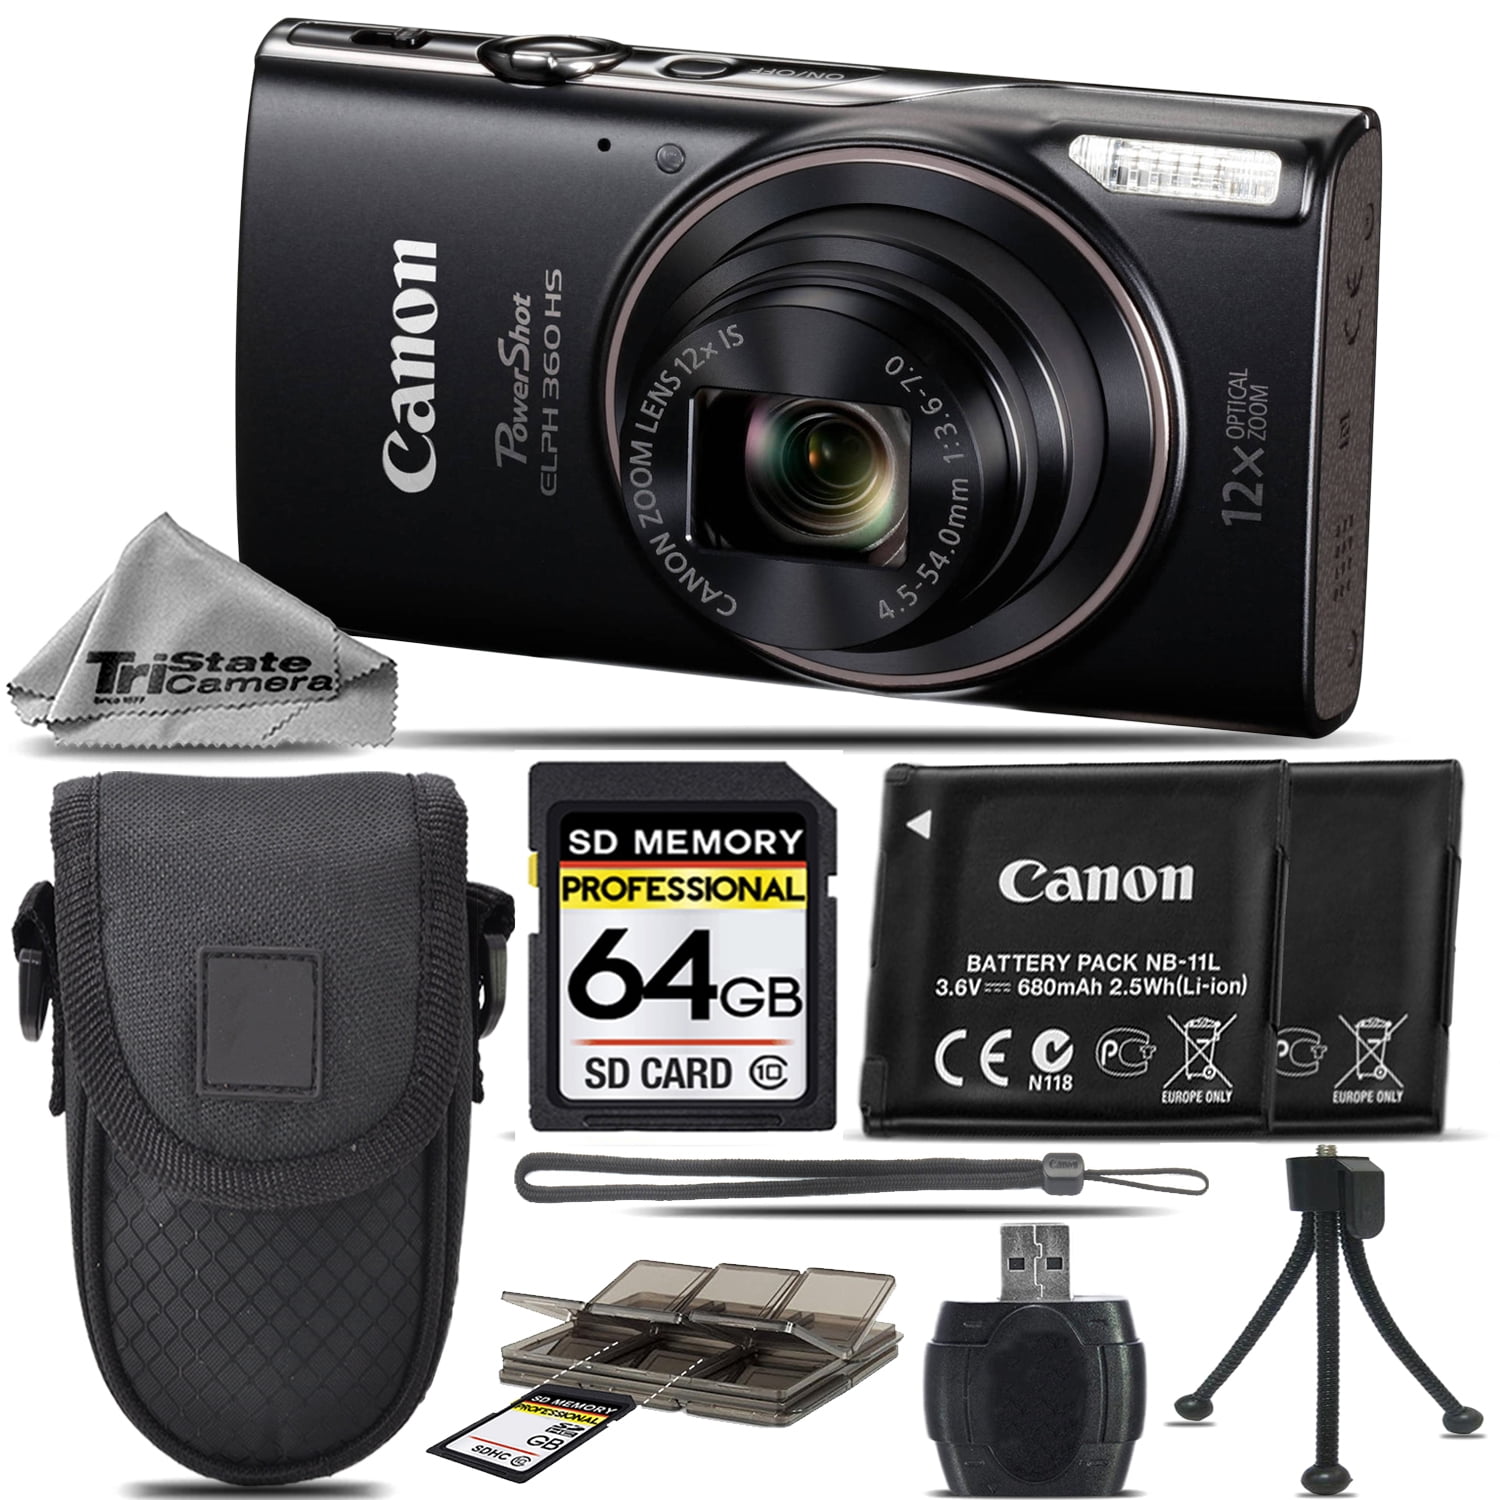 BRAND NEW Canon PowerShot ELPH 360 Digital Camera w/ 12x Optical Zoom Silver